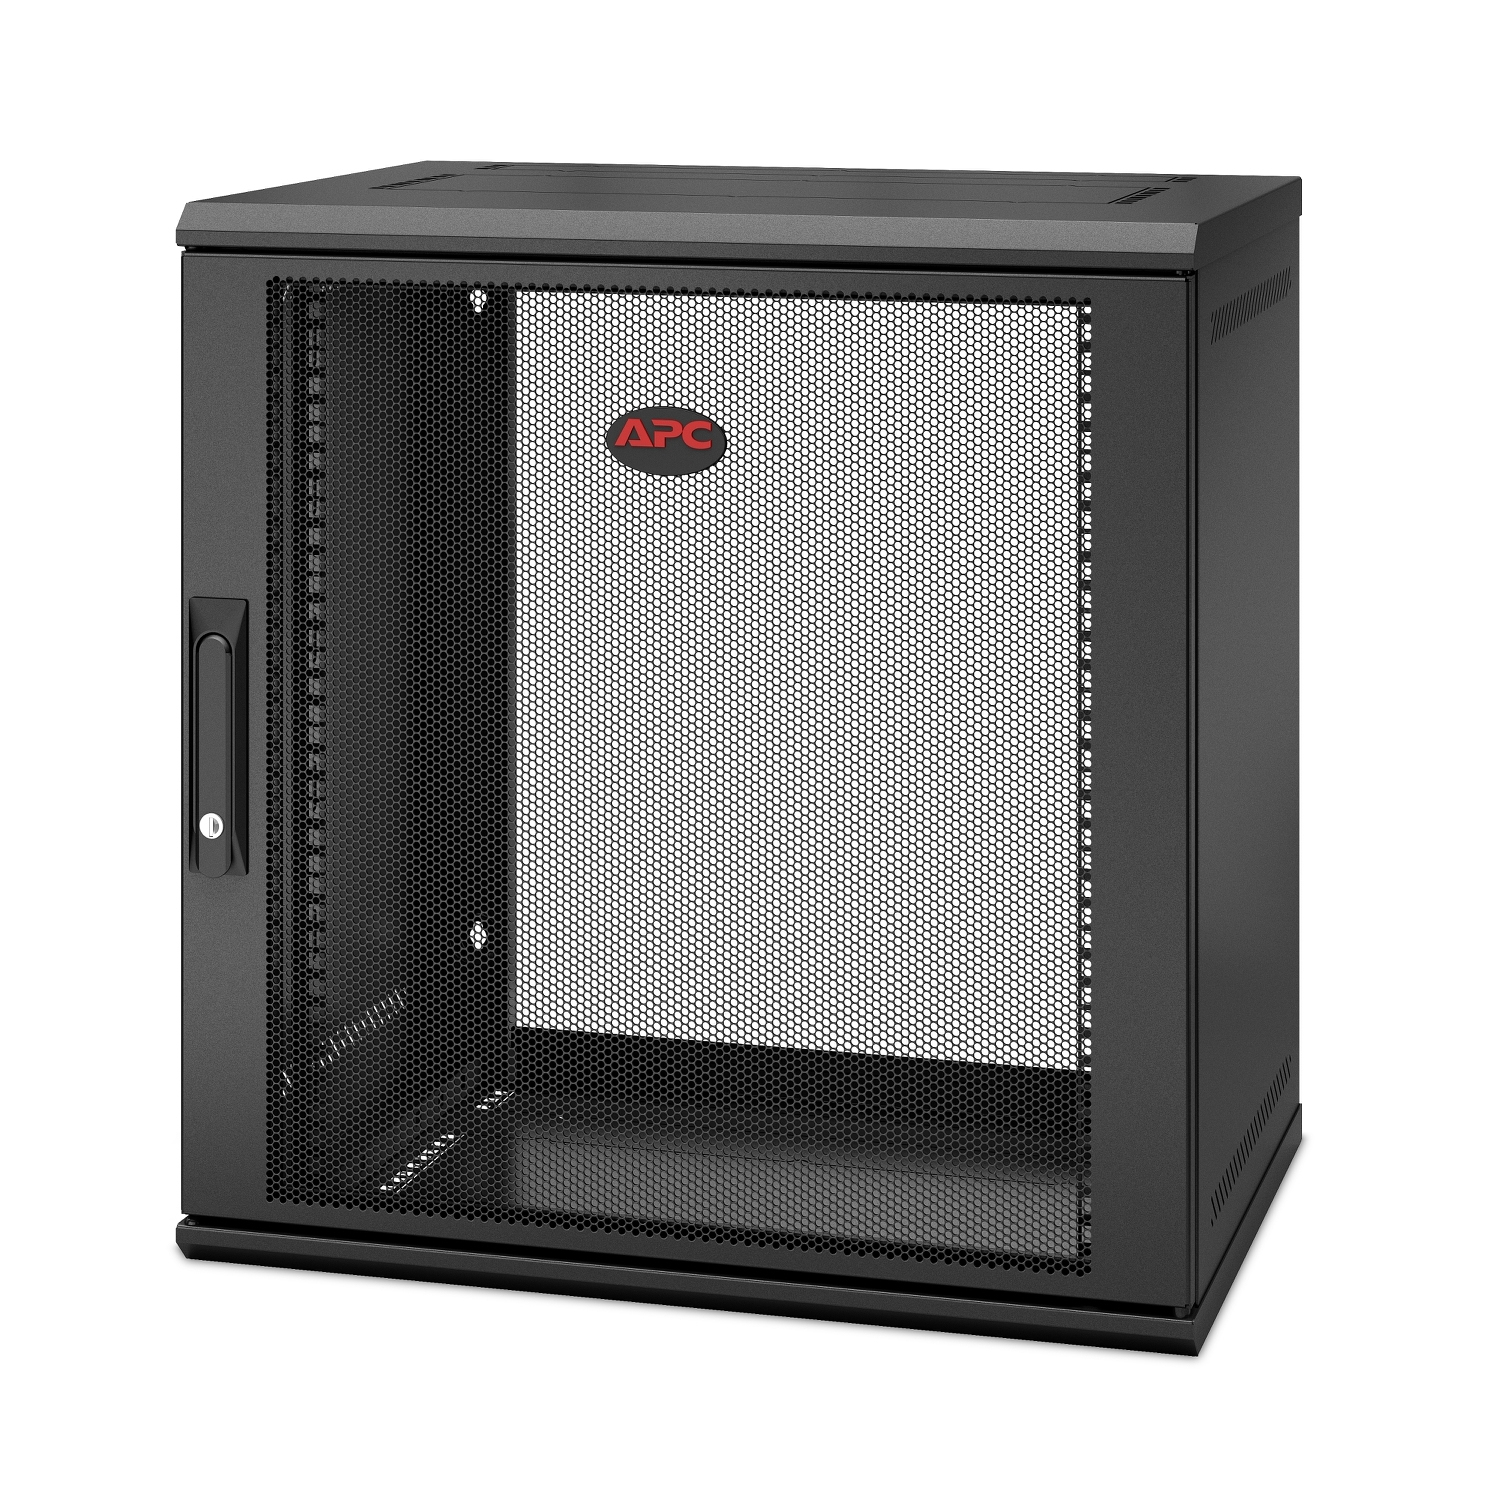  NetShelter WX 12U Single Hinged Wall-mount Enclosure 400mm Deep